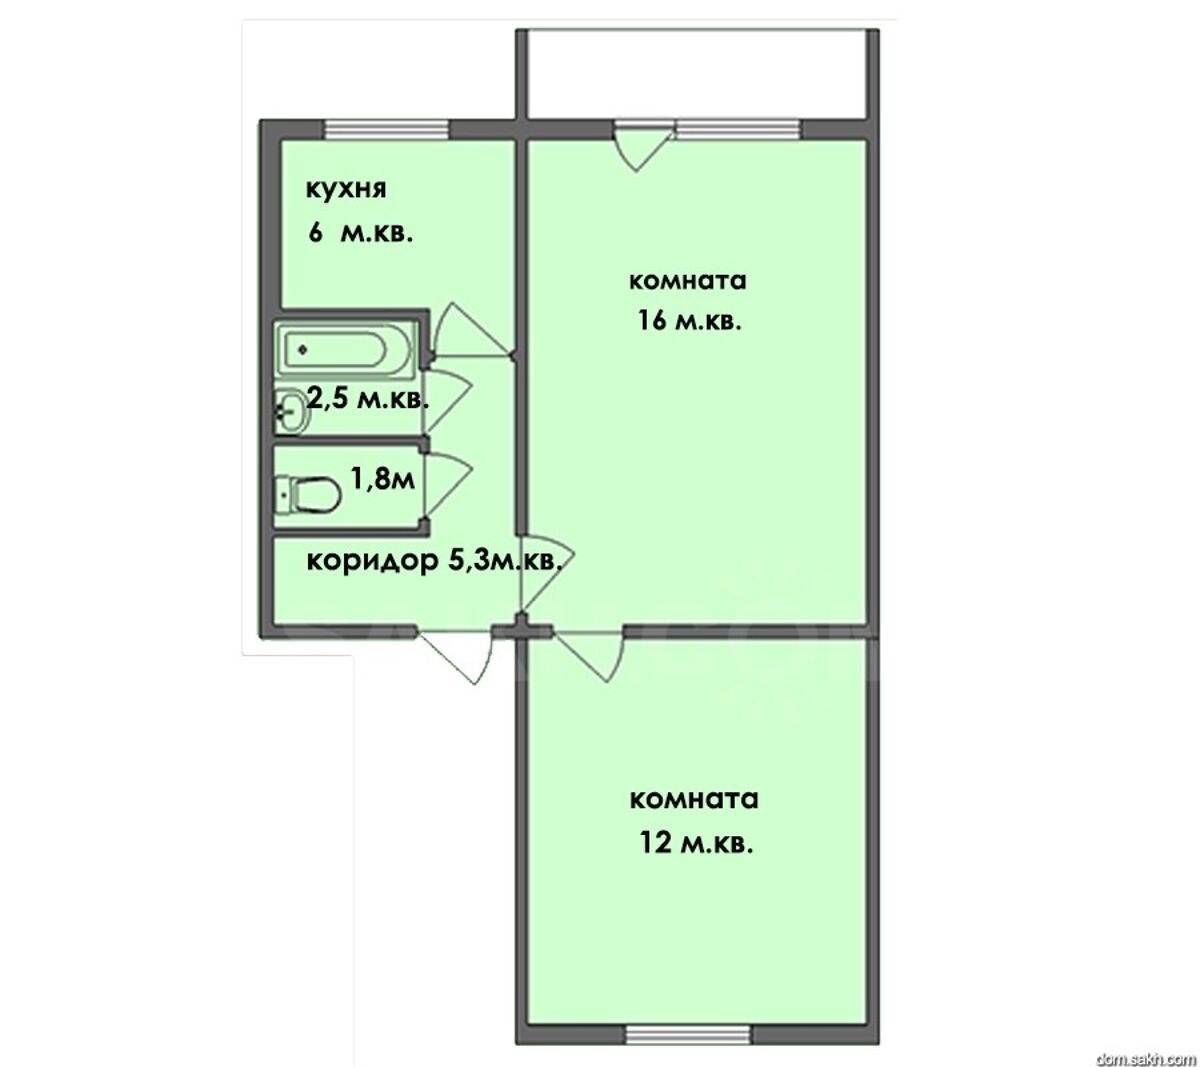 Планировка квартиры 2 комнатной брежневки